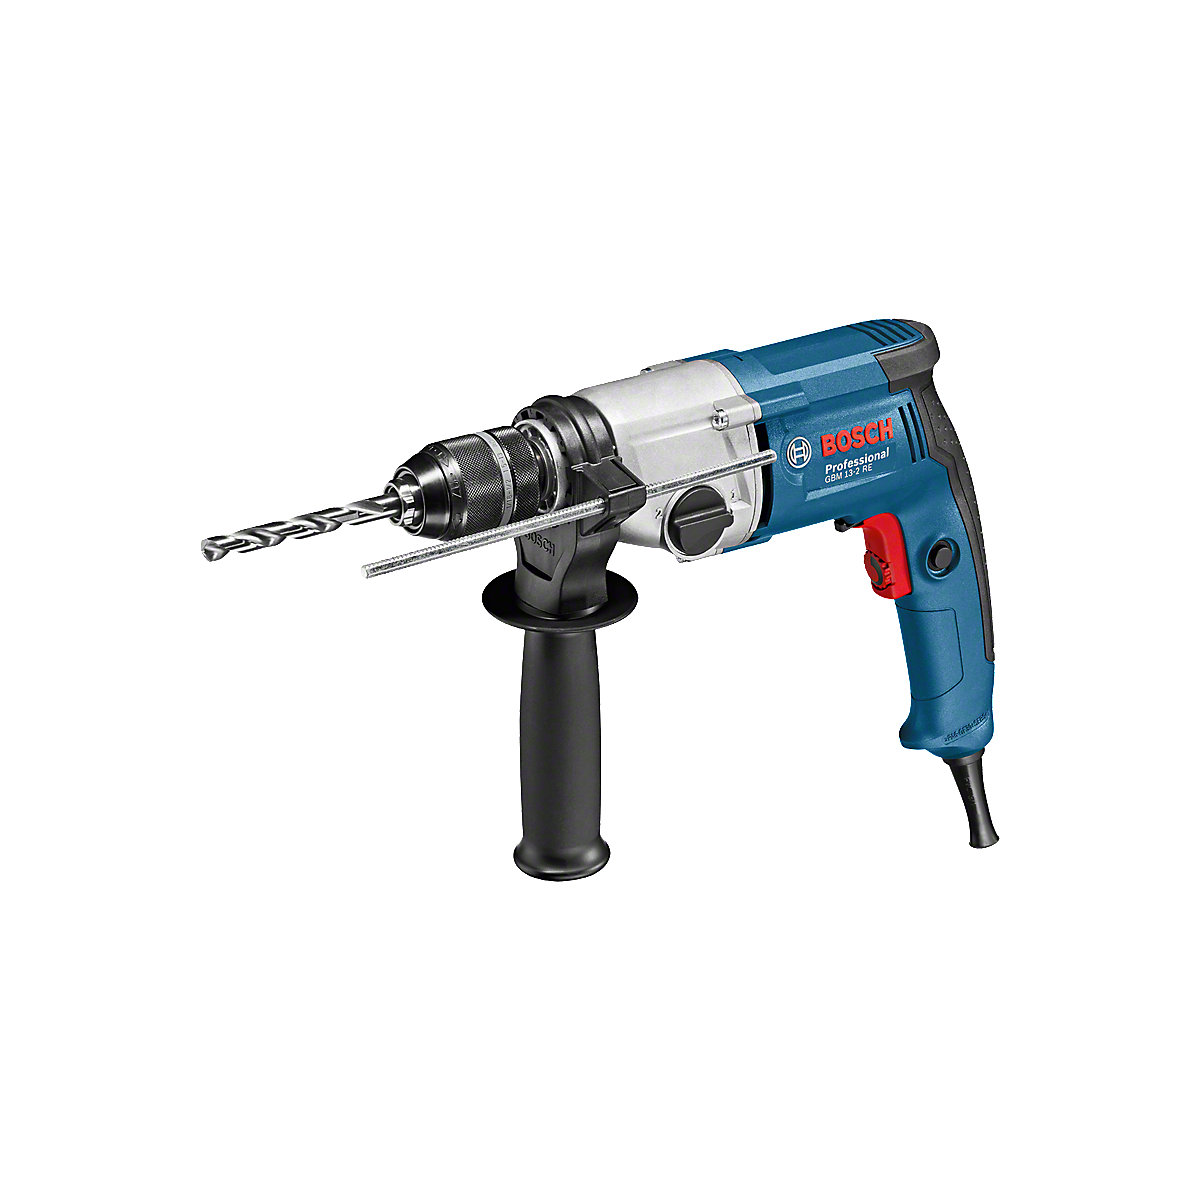 GBM 13-2 RE Professional drill - Bosch